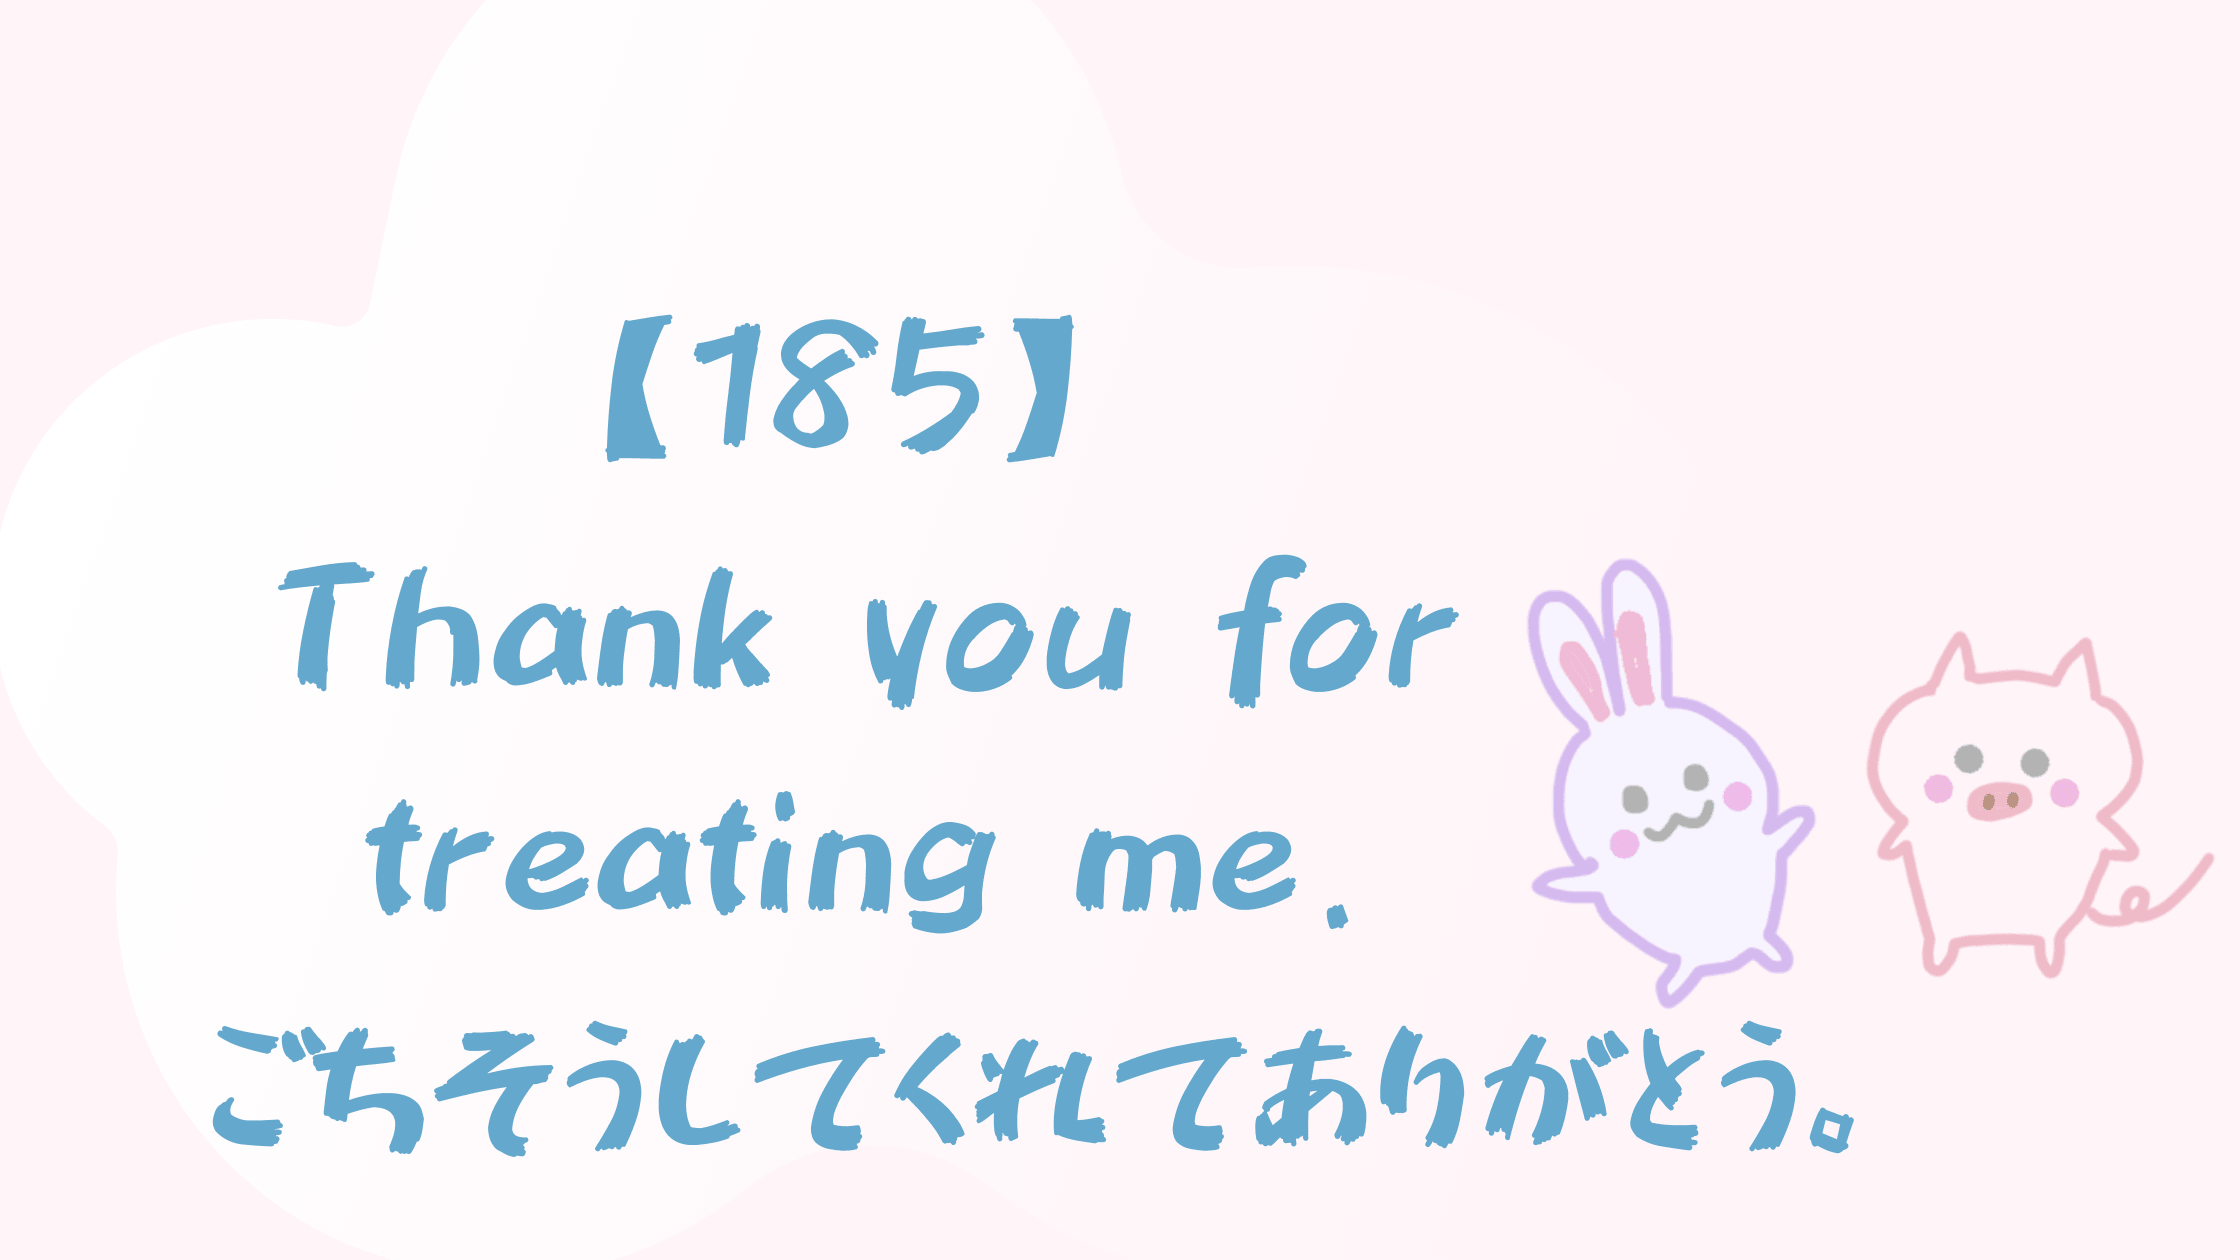 185 Thank You For Treating Me ご馳走してくれてありがとう Happy Chit Chat 英会話初心者の英語学習を応援するサイト